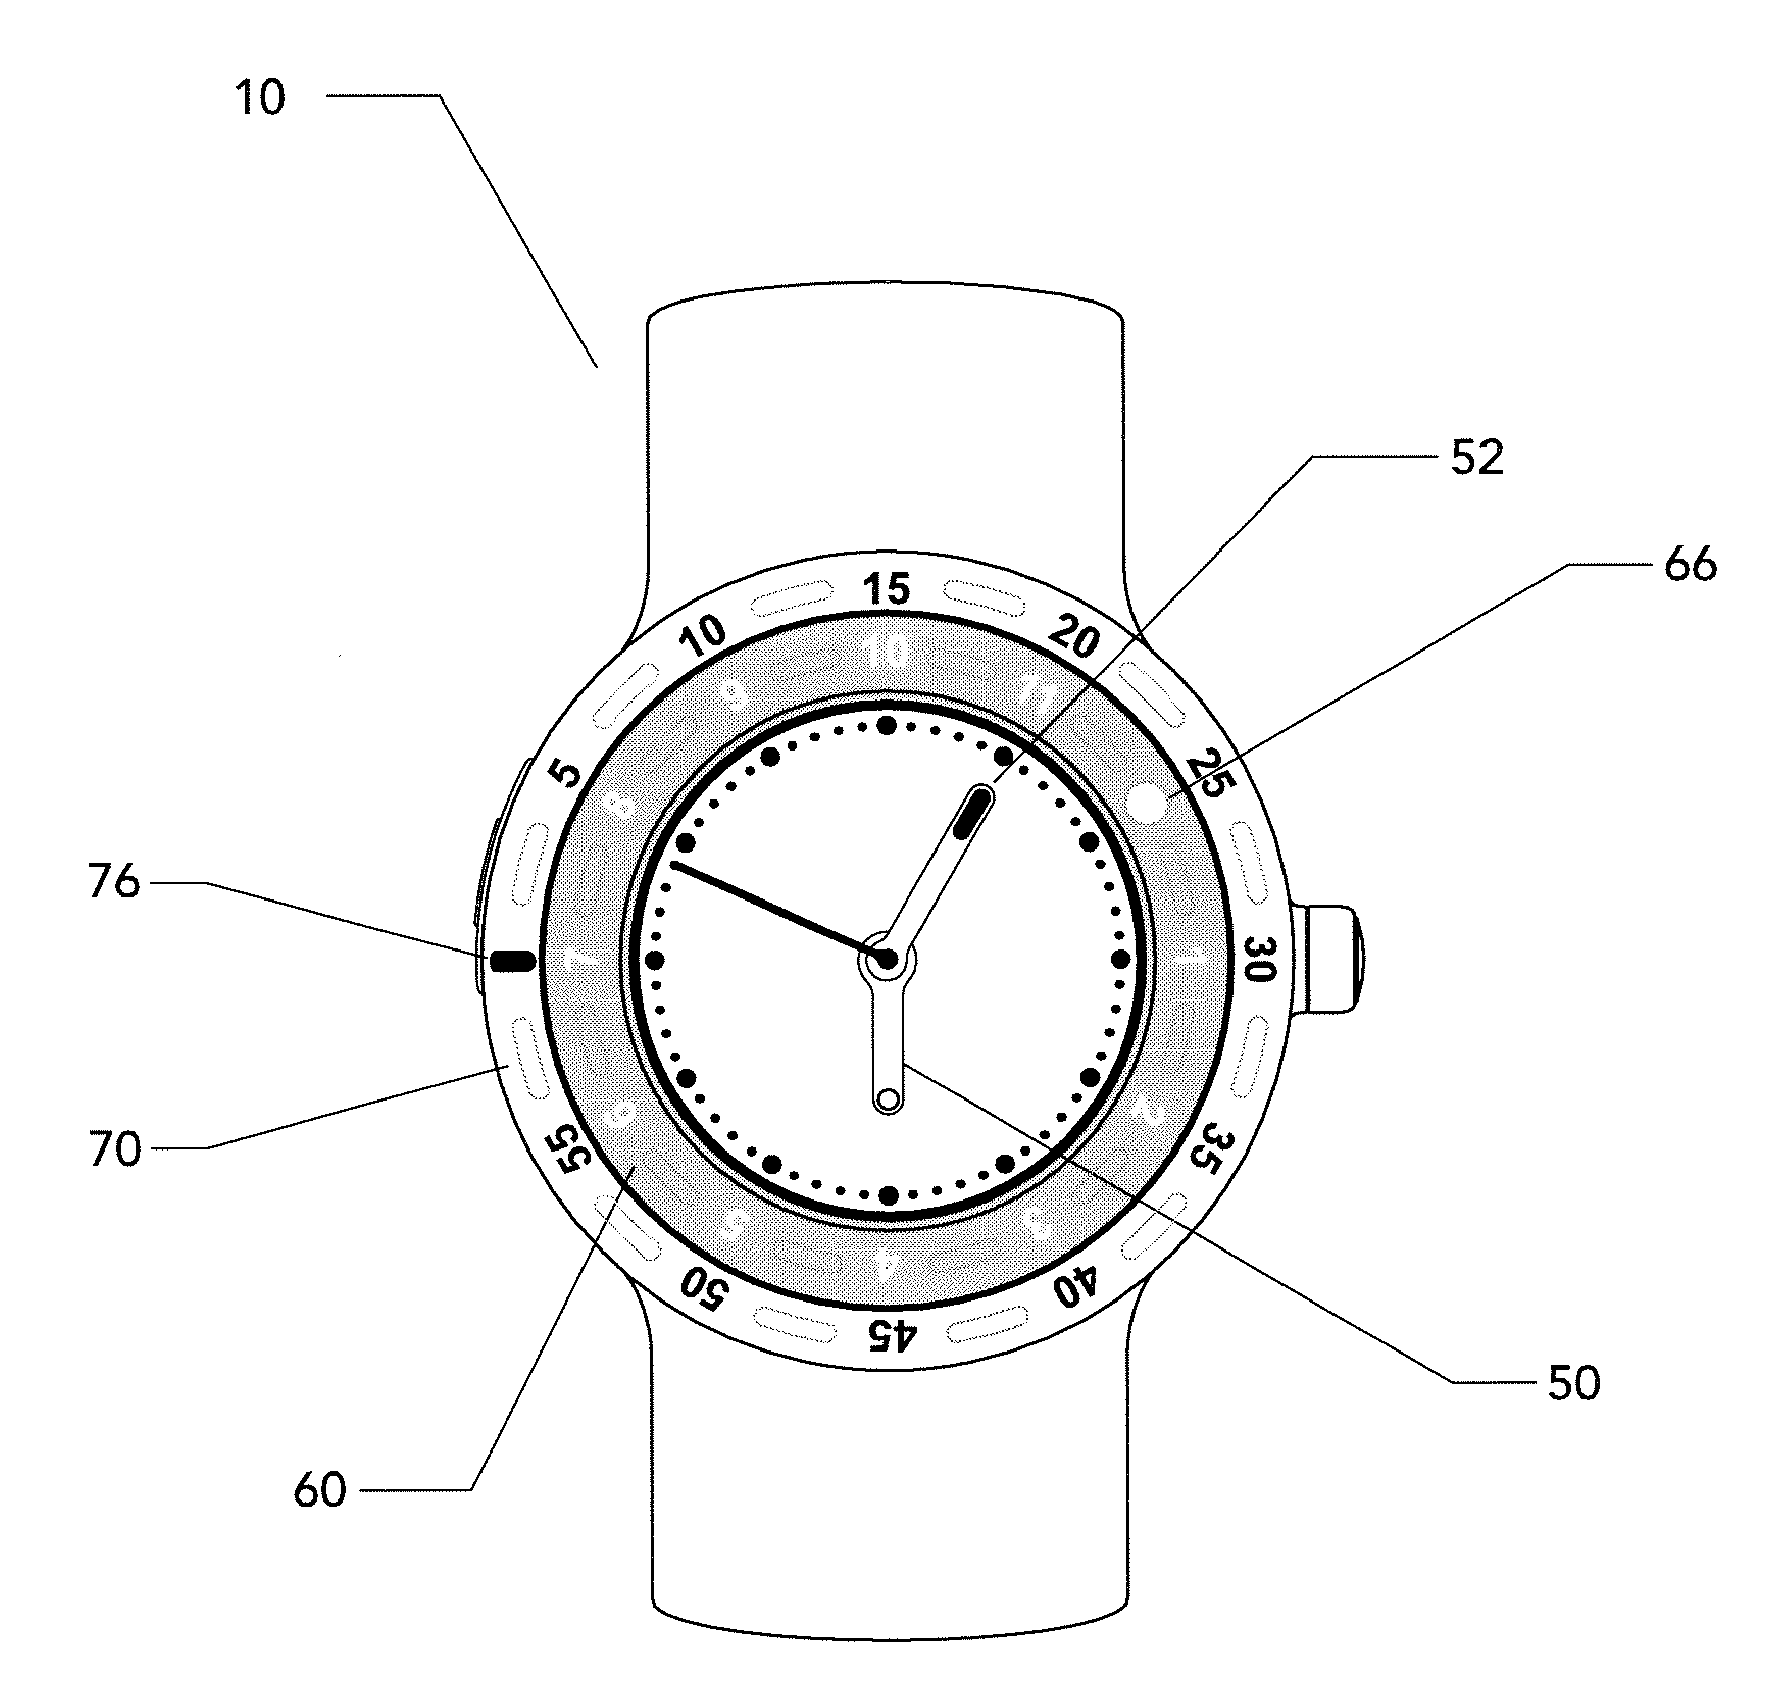 Analog wristwatch having a multi-bezel timing mechanism